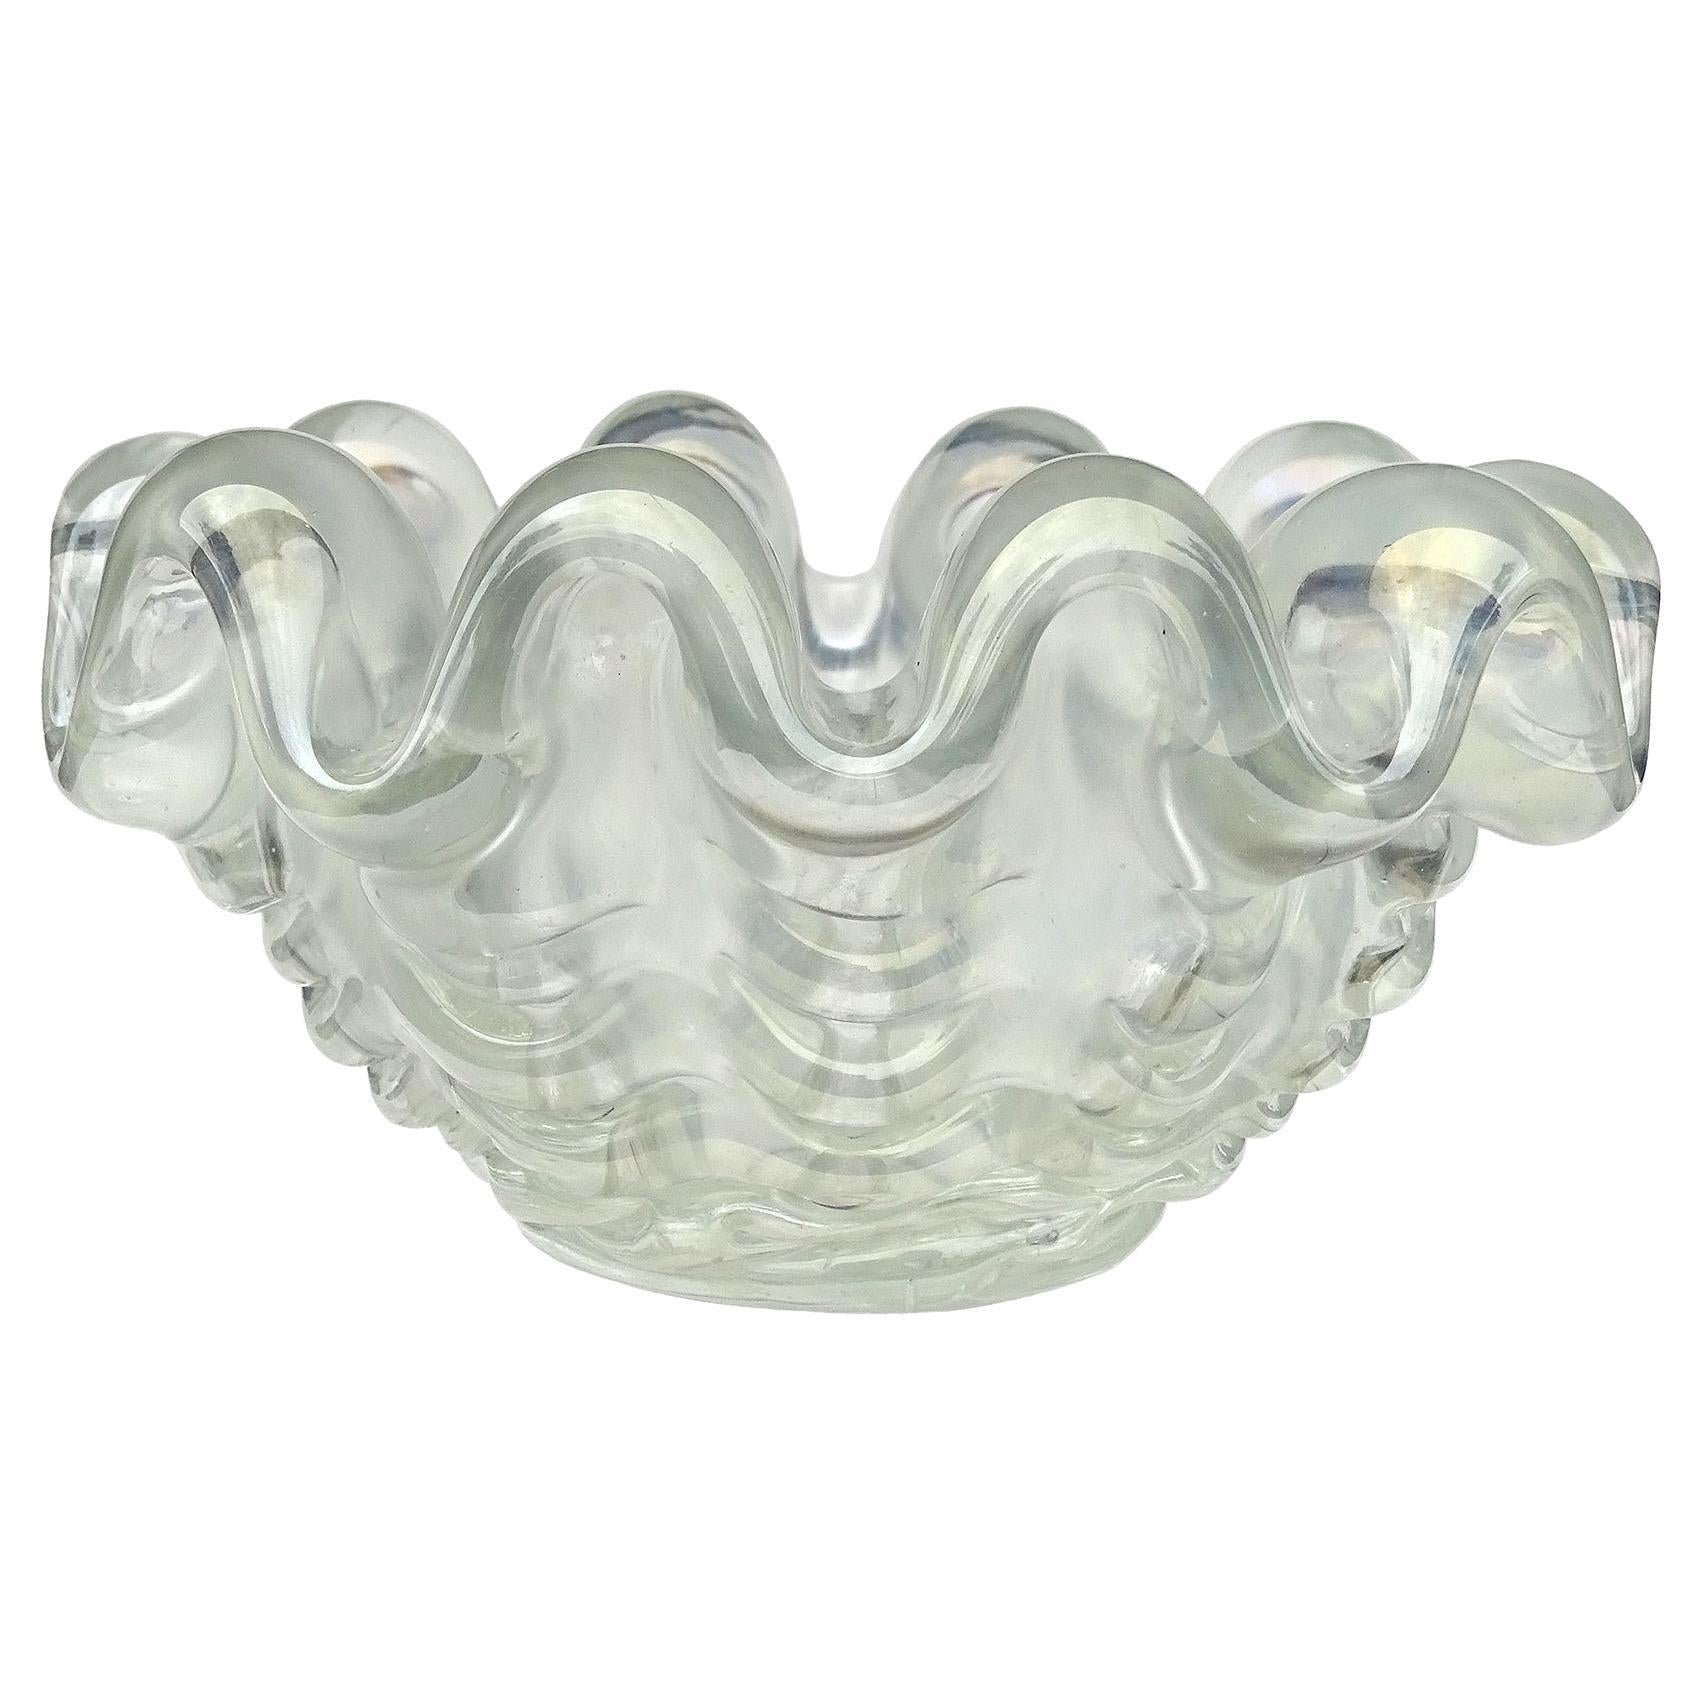 Barovier Toso Murano Iridescent Italian Art Glass Sculptural Conch Seashell Bowl